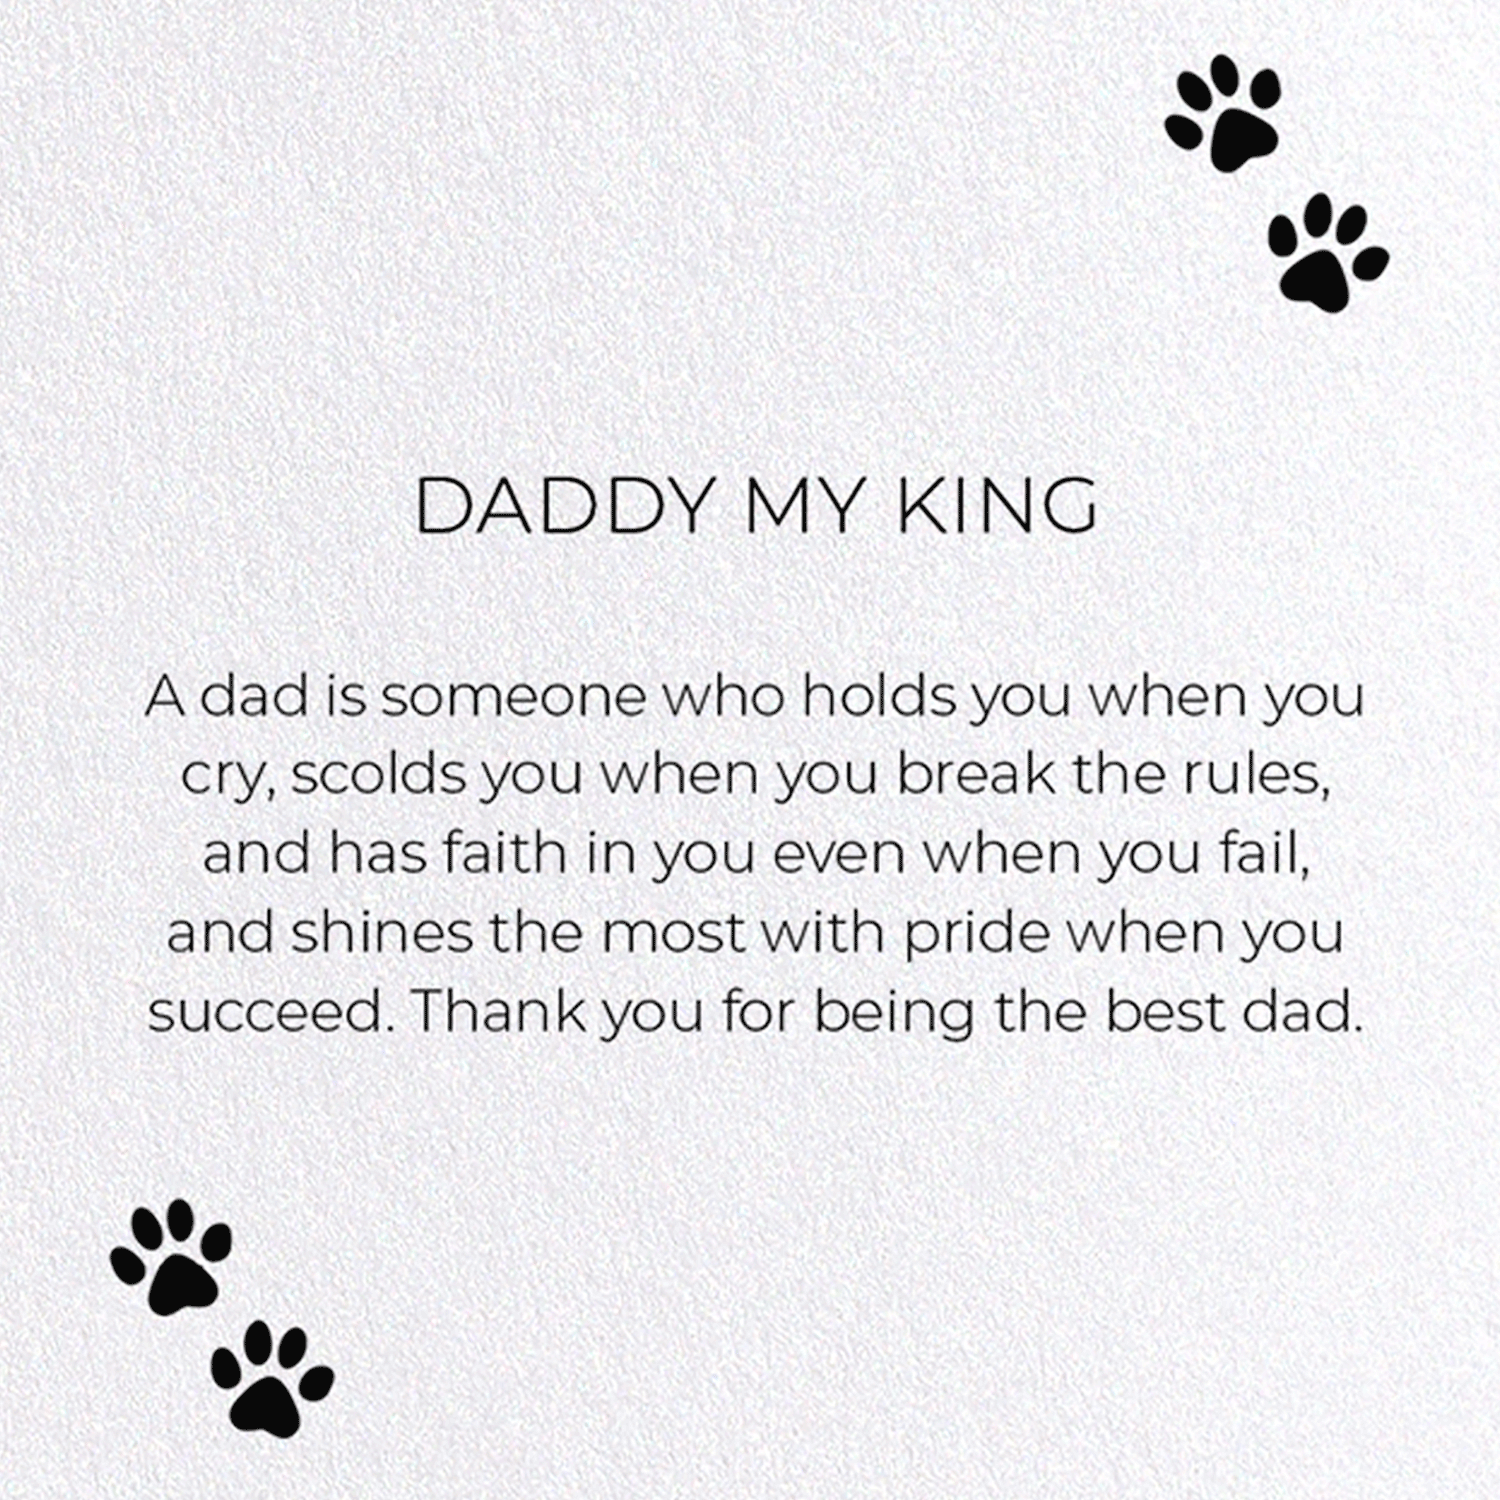 DADDY MY KING: Funny Animal Greeting Card